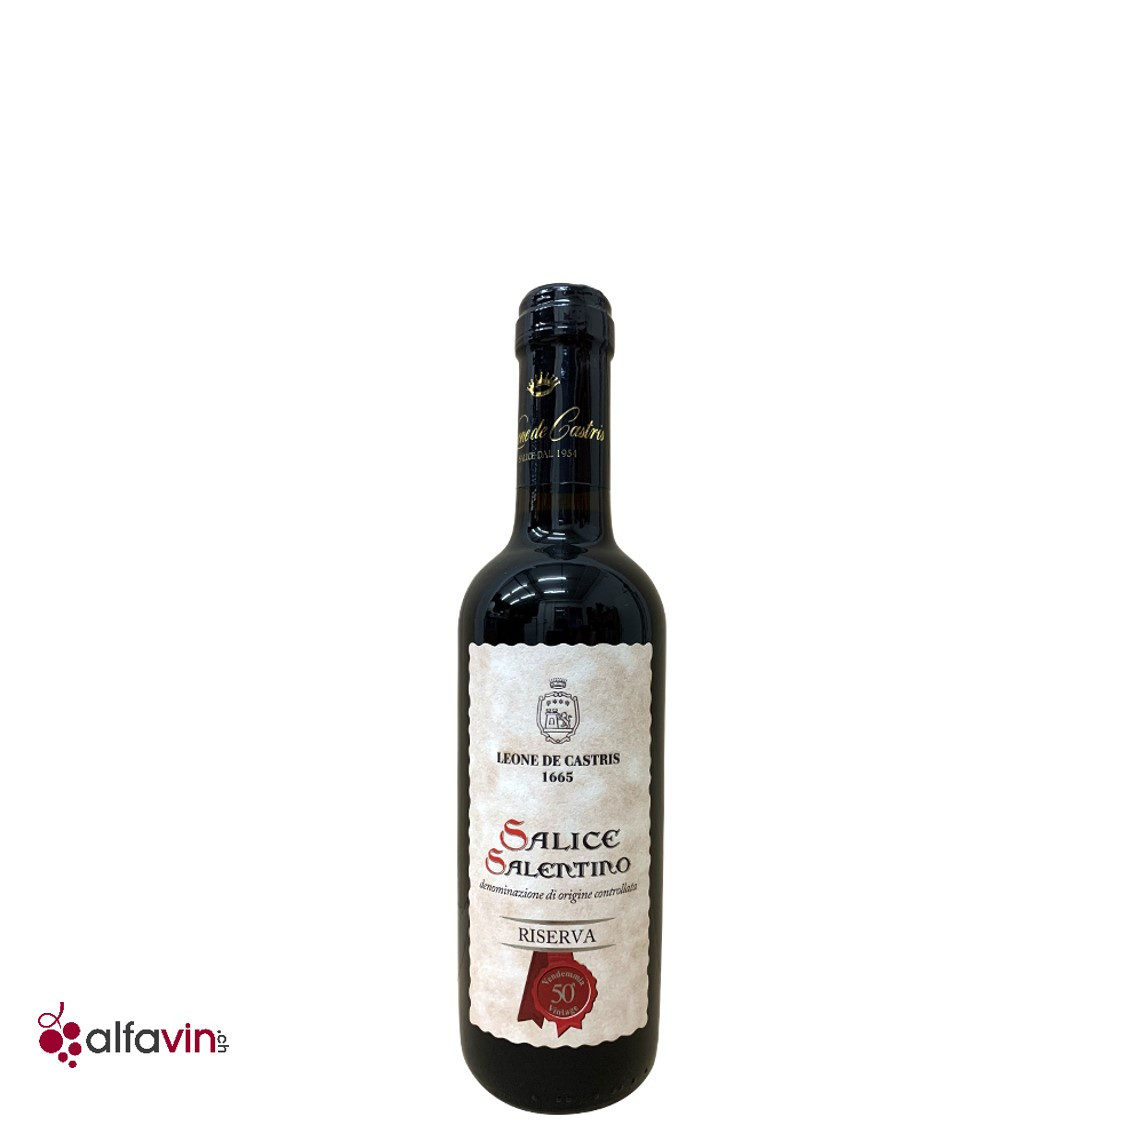 Salice Salentino Rotwein Italien 2019 Castris Leone cl, Riserva De aus 37.5